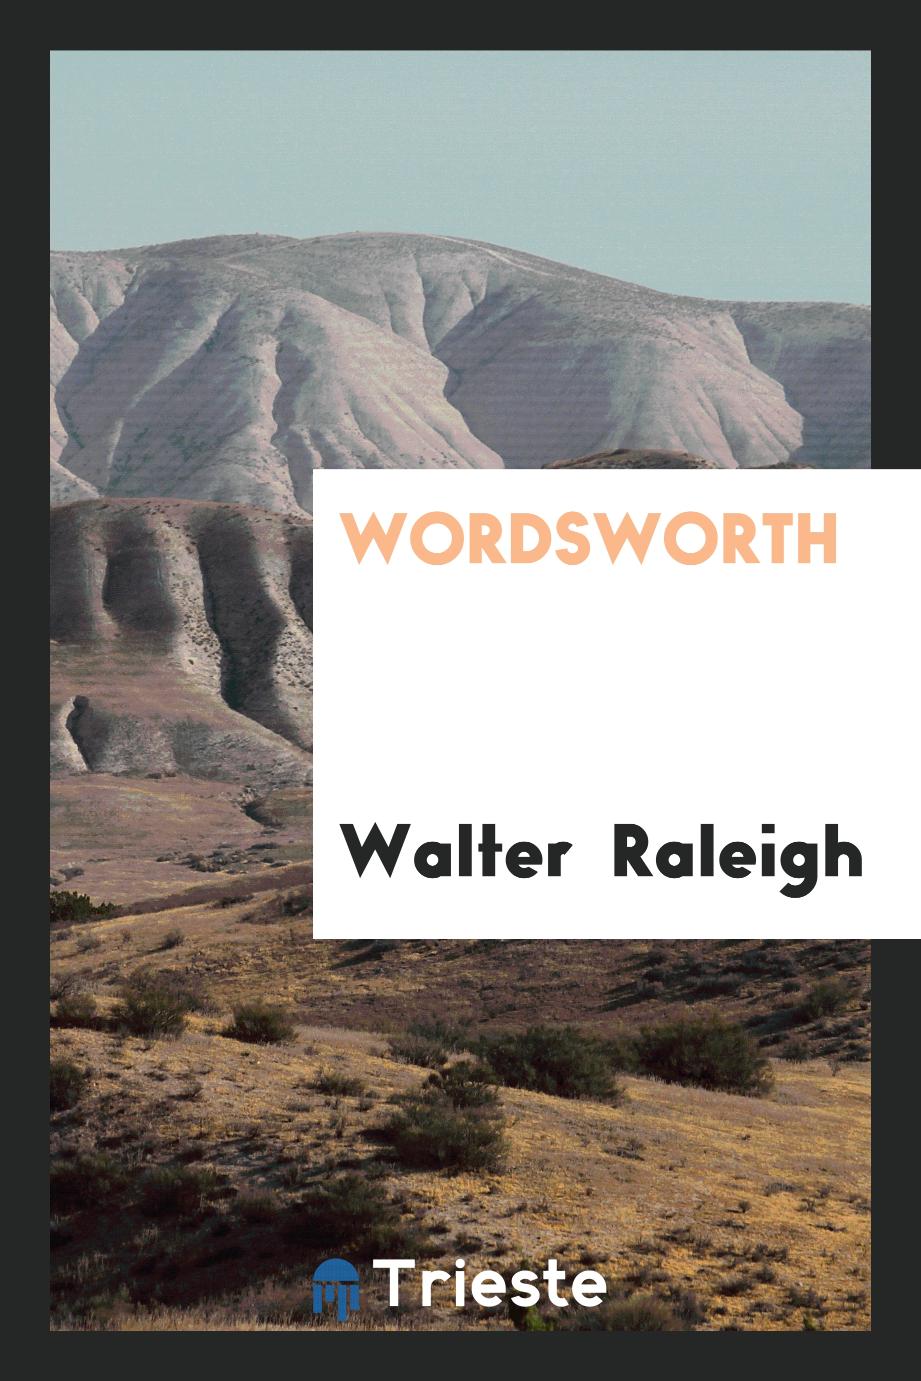 Walter Raleigh - Wordsworth